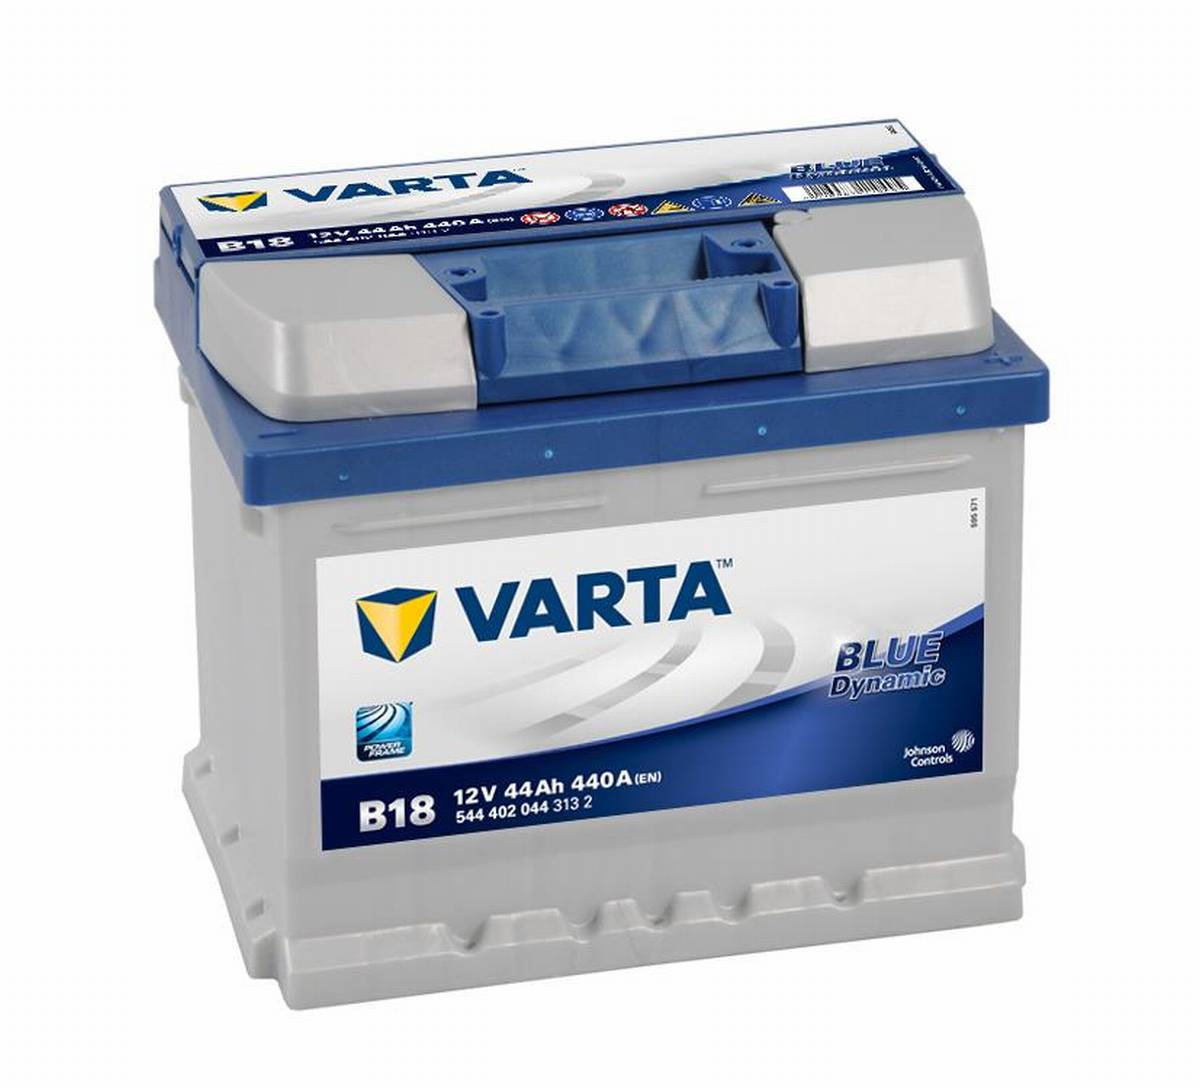 VARTA B18 Blue Dynamic 12V 44Ah 440A Batteria auto 544 402 044